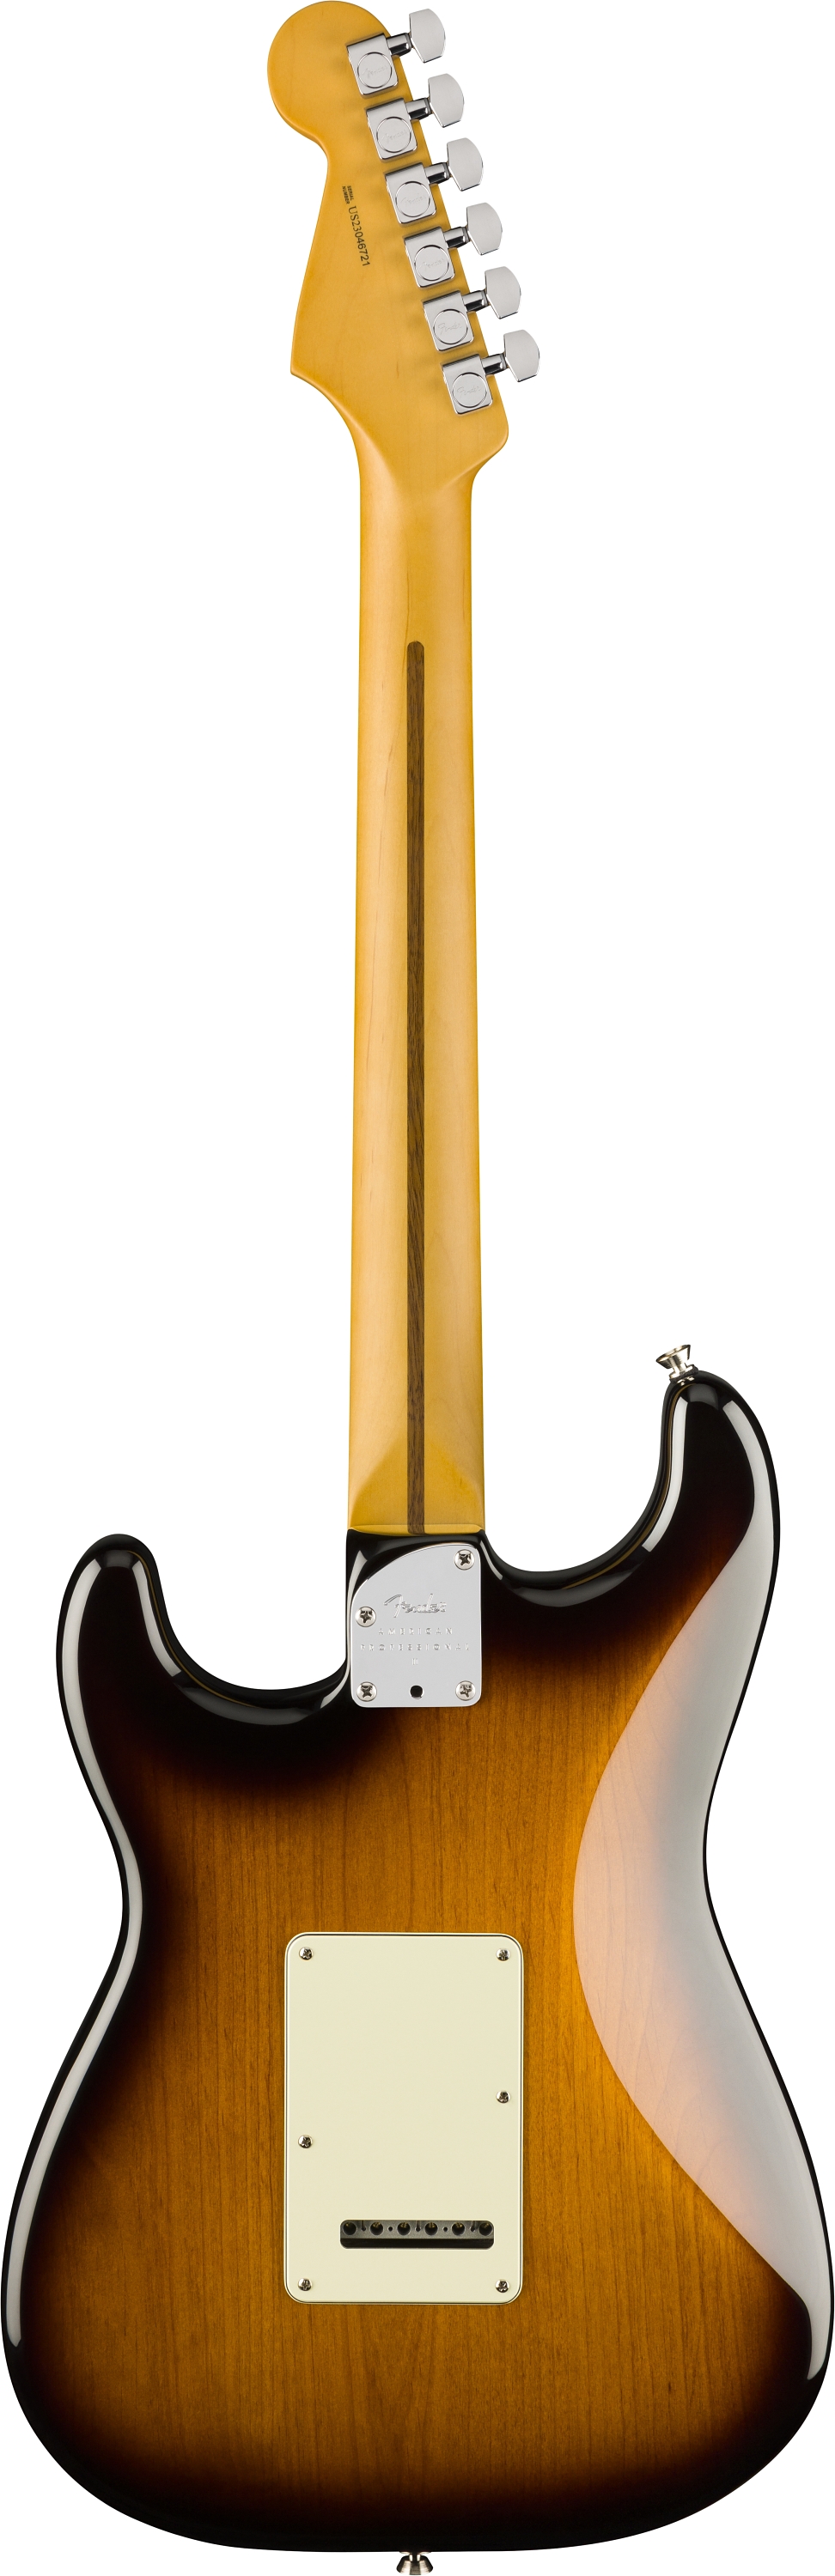 Fender Strat American Professional Ii 70th Anniversary Usa 3s Trem Rw - 2-color Sunburst - Guitarra eléctrica con forma de str. - Variation 2